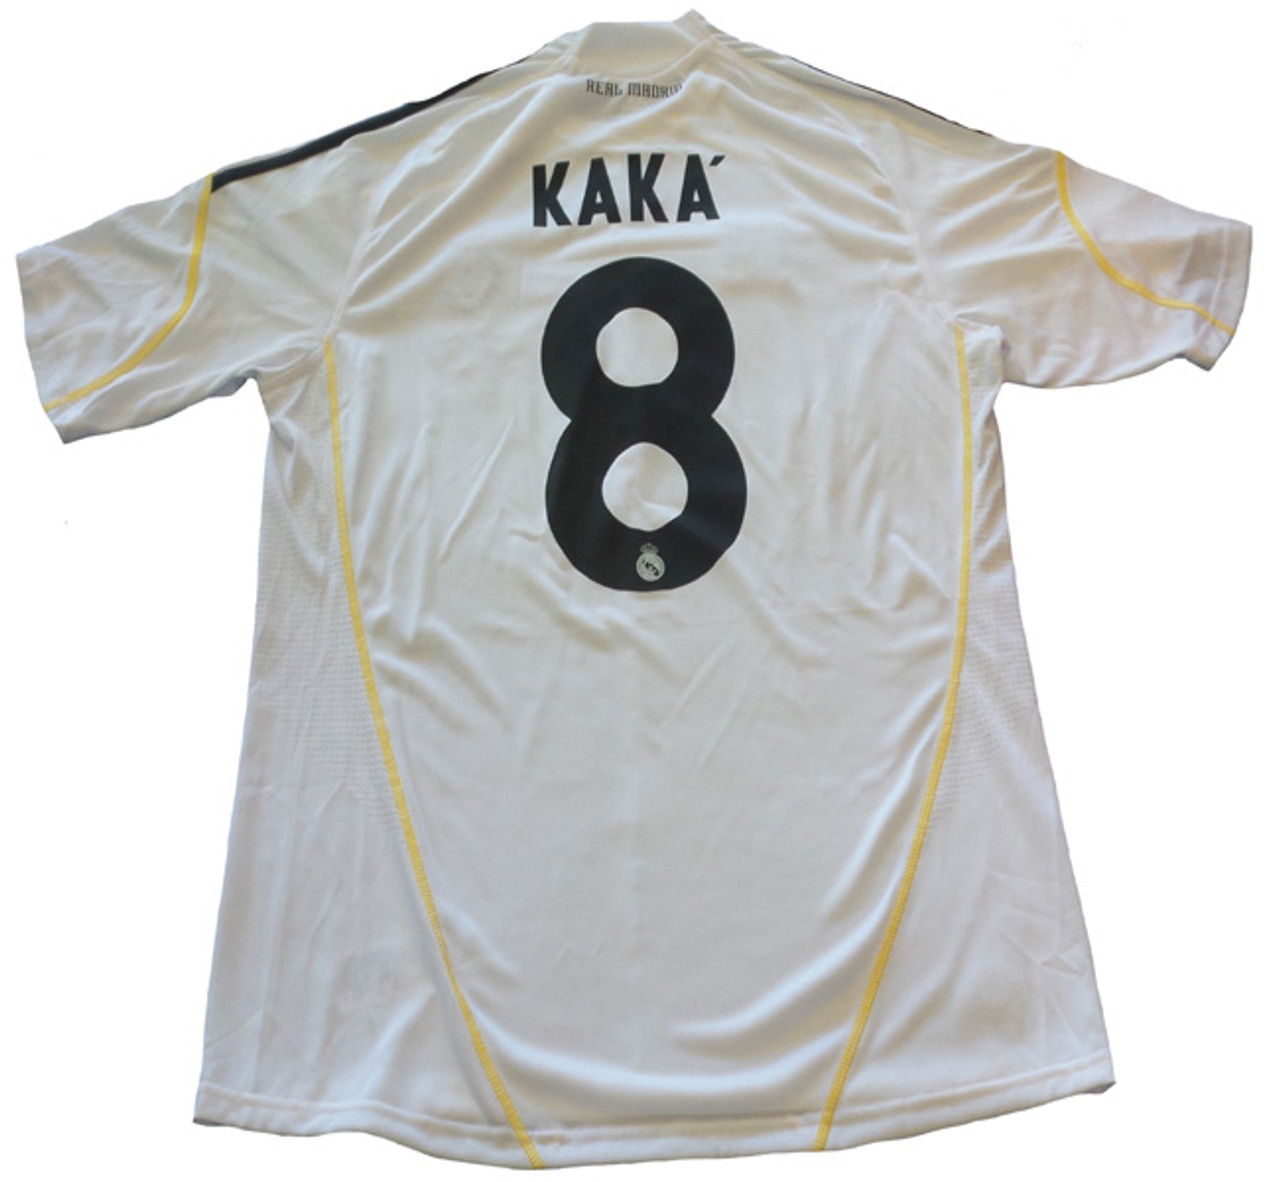 kaka kit number